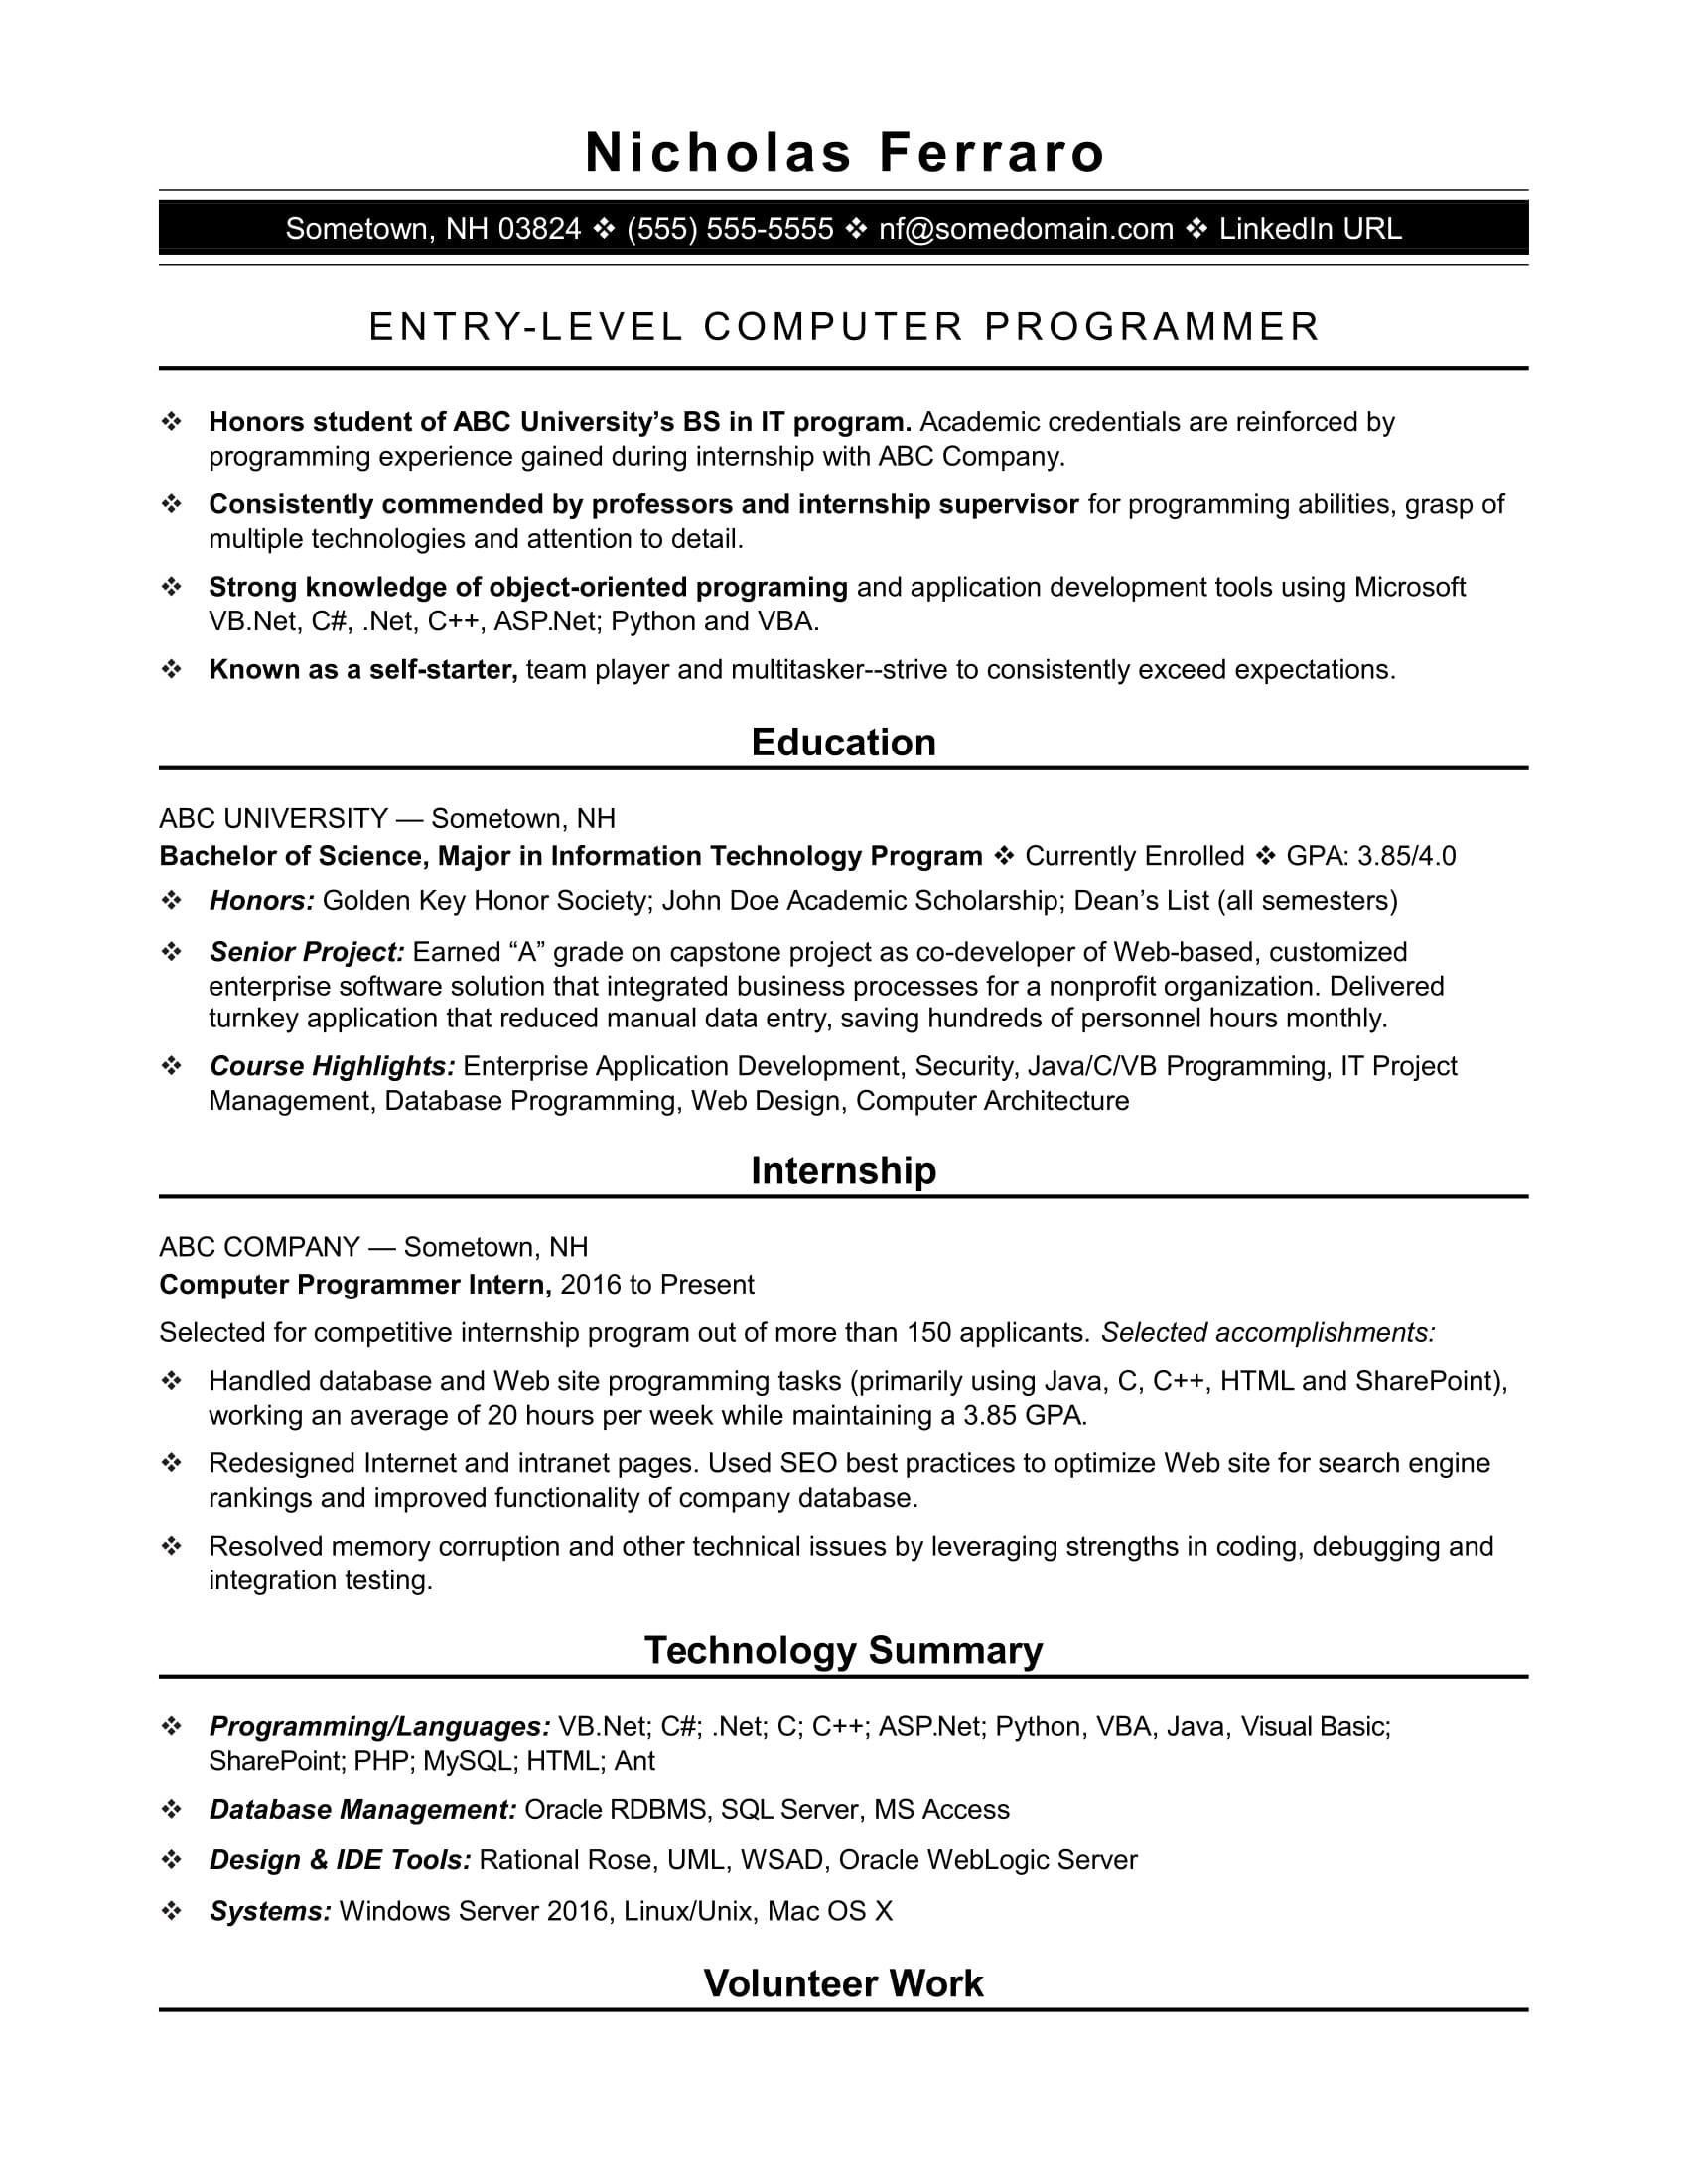 Sample Resume For An Entry